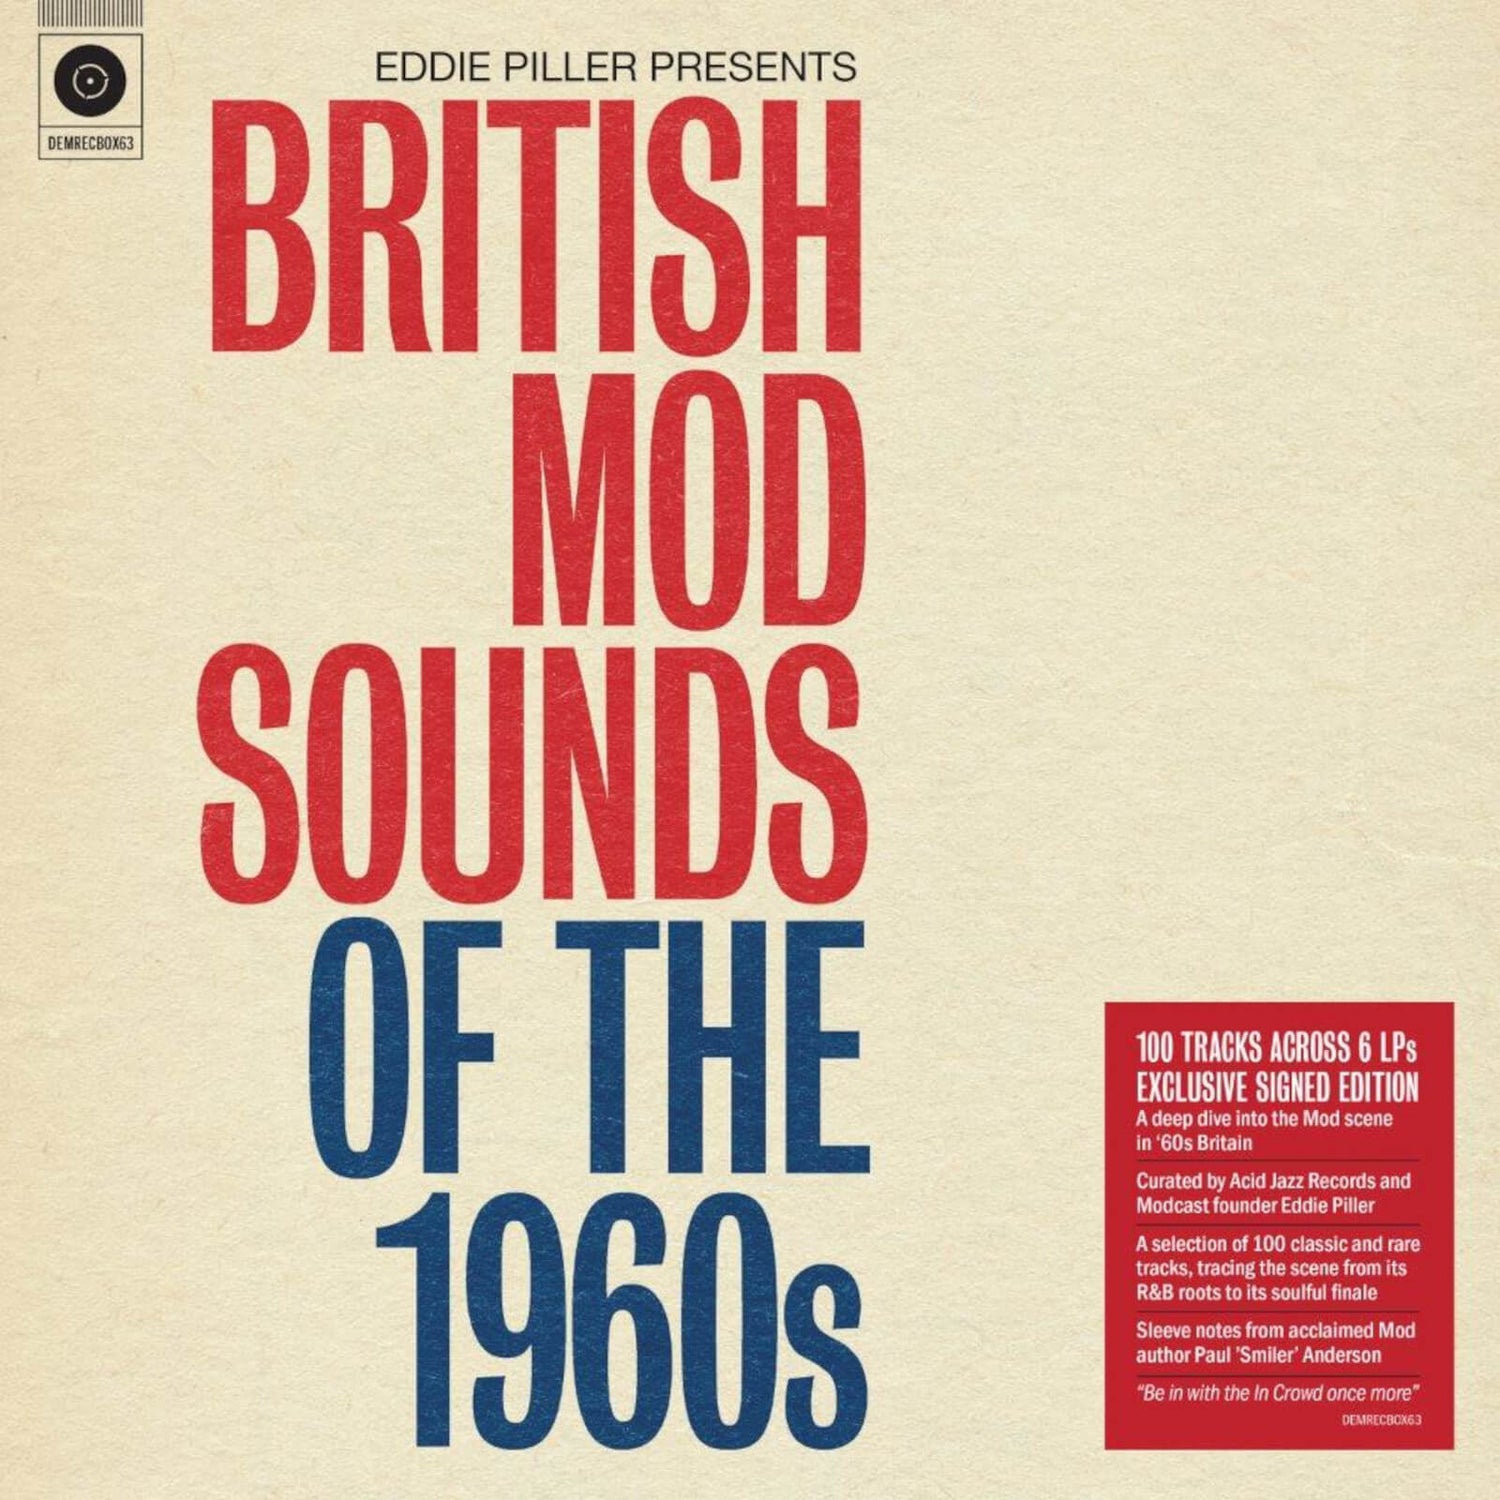 Eddie Piller Presents - British Mod Sounds Of the 1960s (Signed Edition - 140g Black Vinyl) Vinyl Box Set Box Set